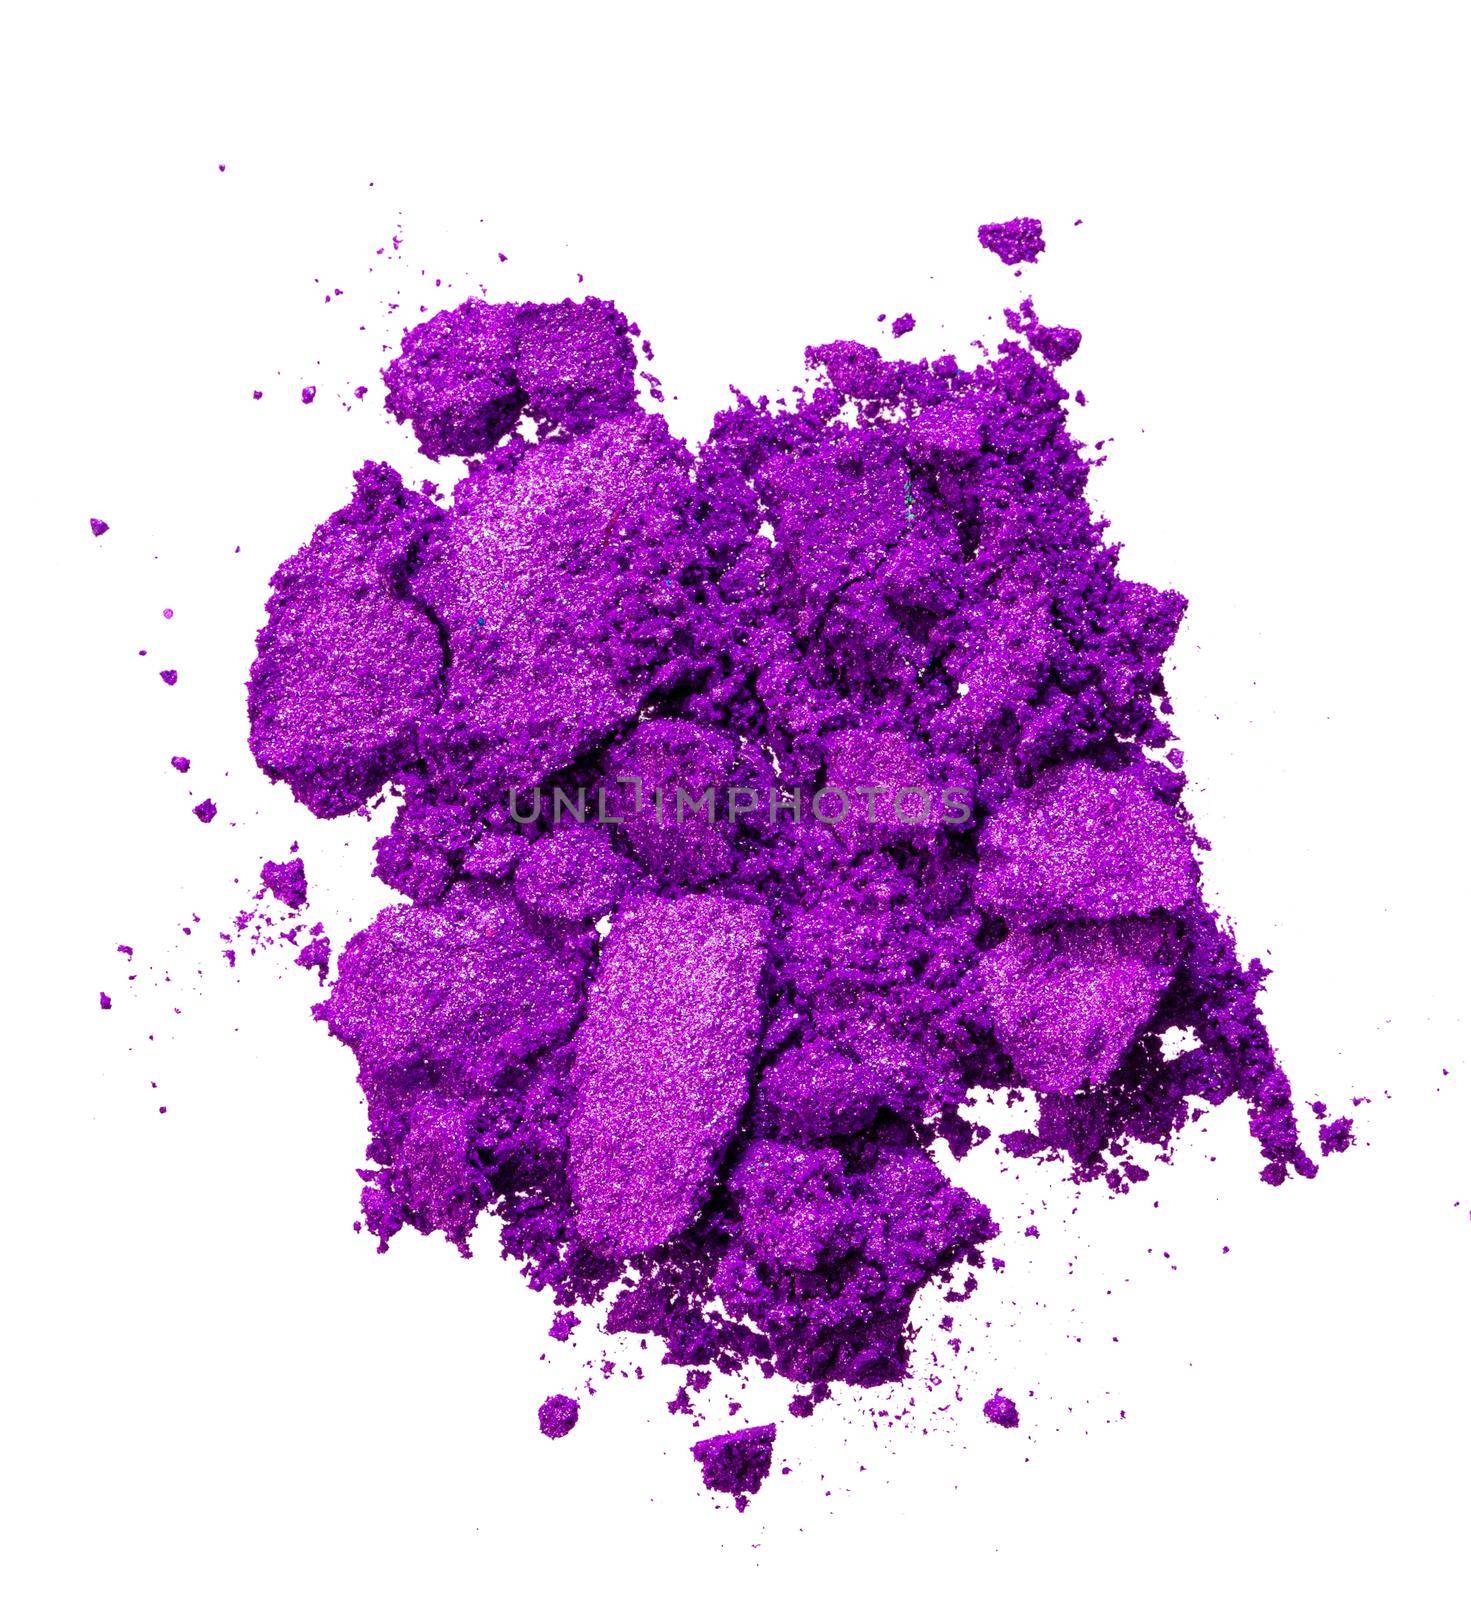 Smashed eyeshadows of bright purple color, make up by Fabrikasimf